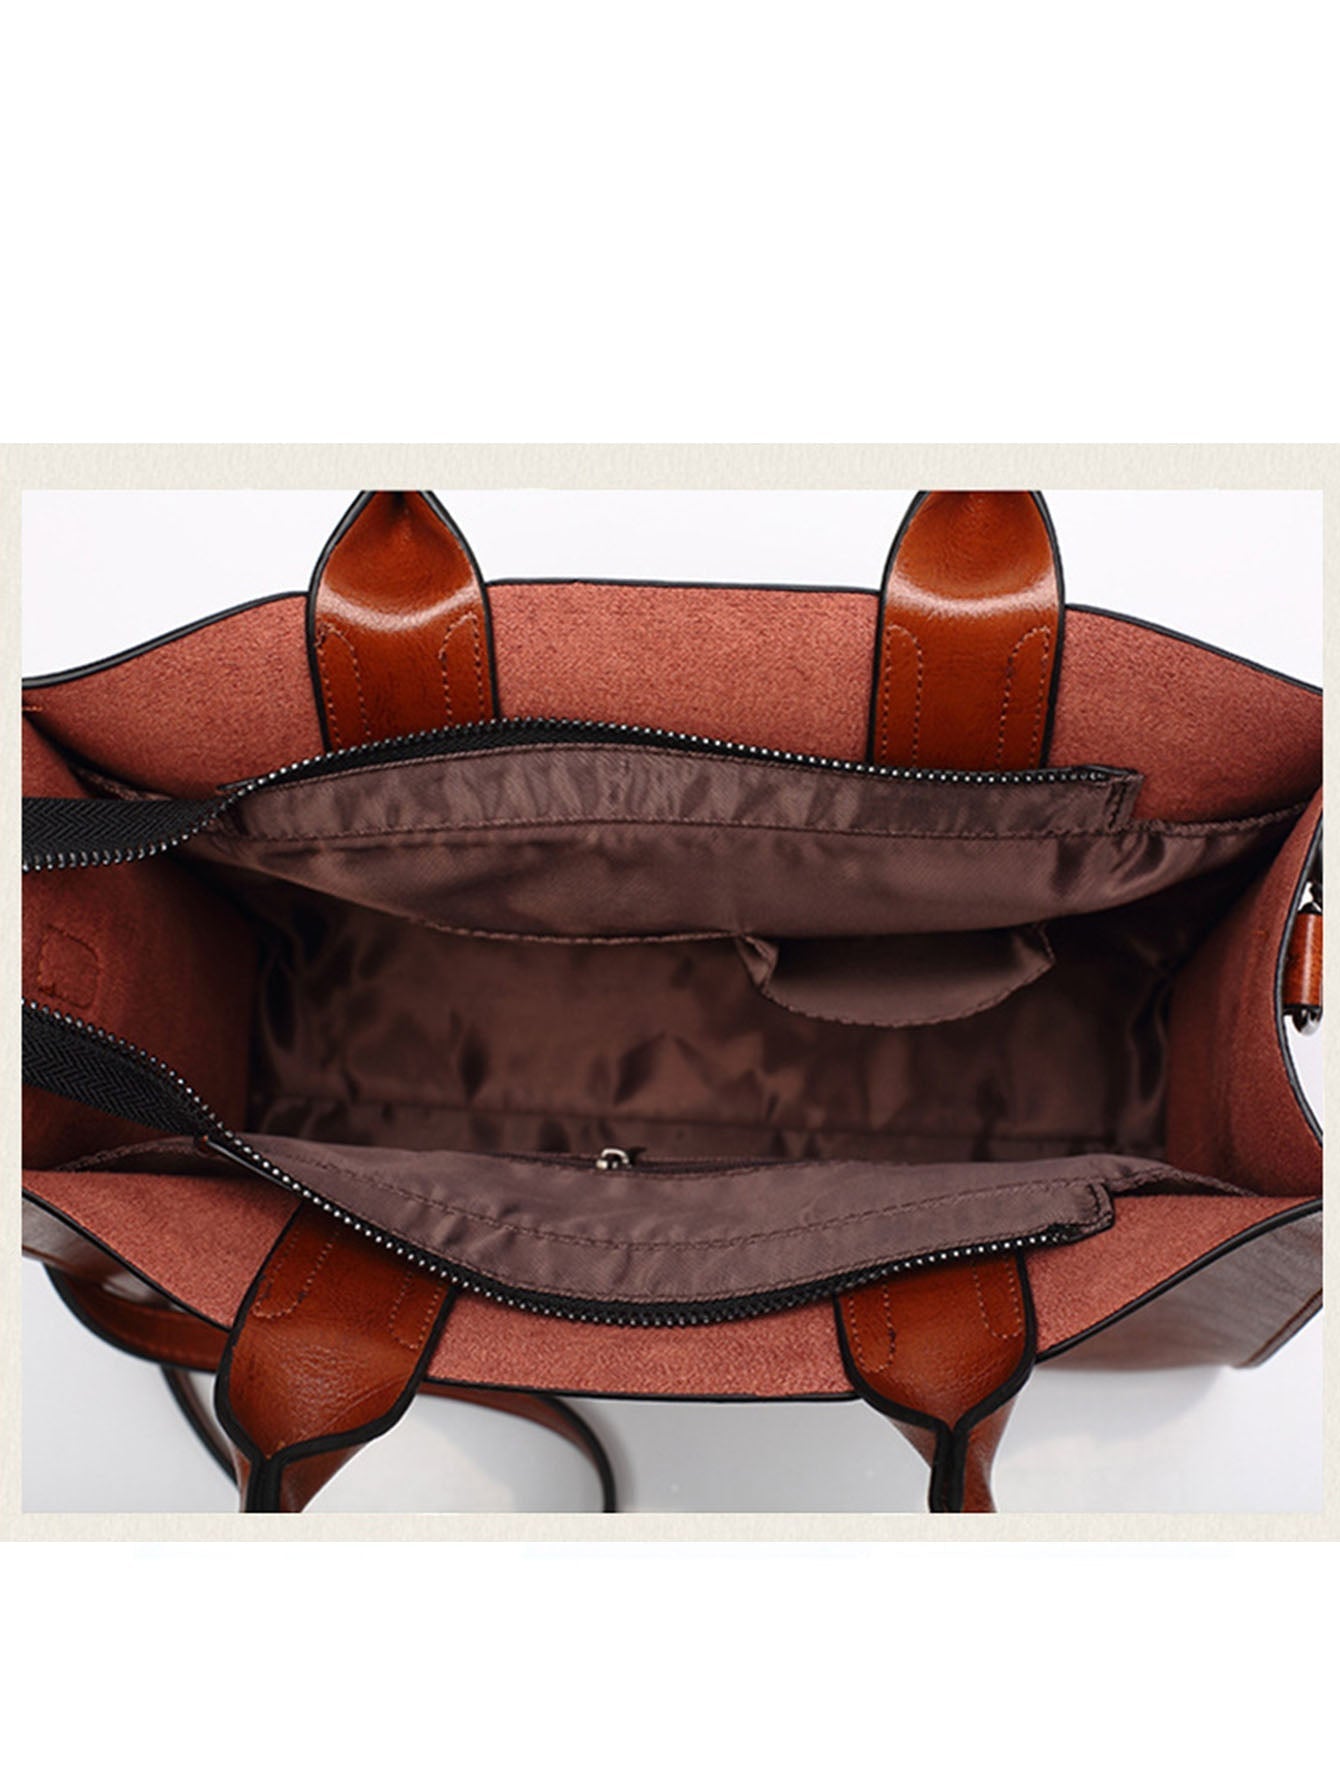 Women oil wax leather tote bag simple large capacity single shoulder messenger handbag Sai Feel